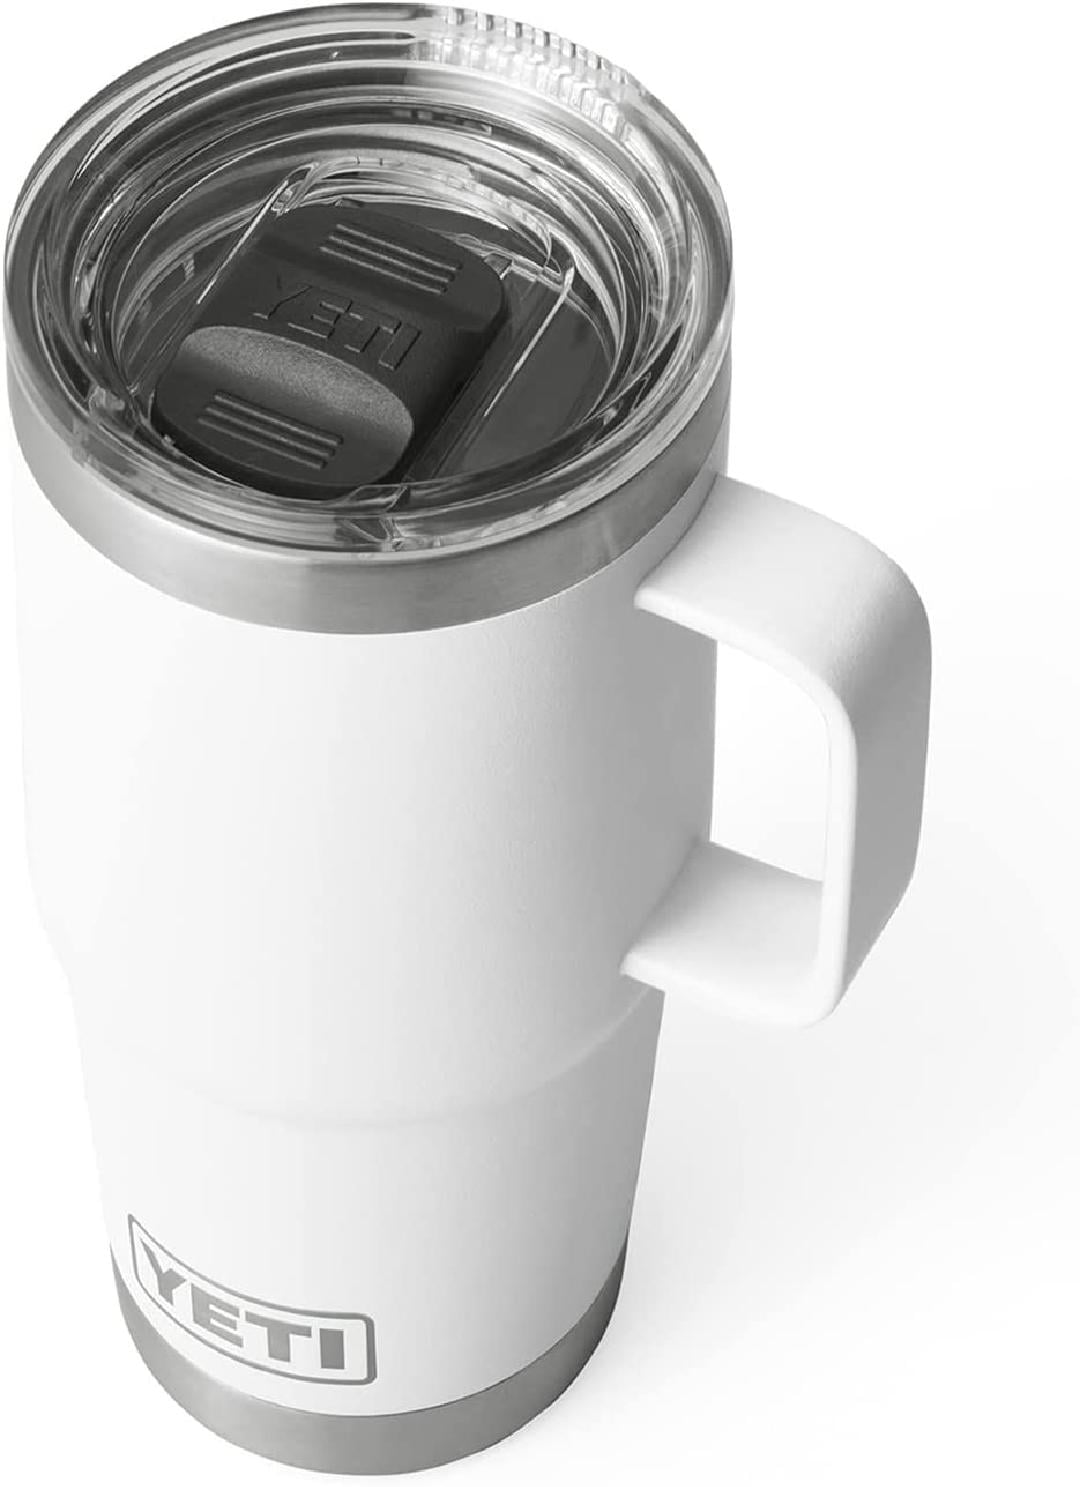 YETI Rambler 20oz Travel Mug, Vacuum Insulated with Stronghold Lid